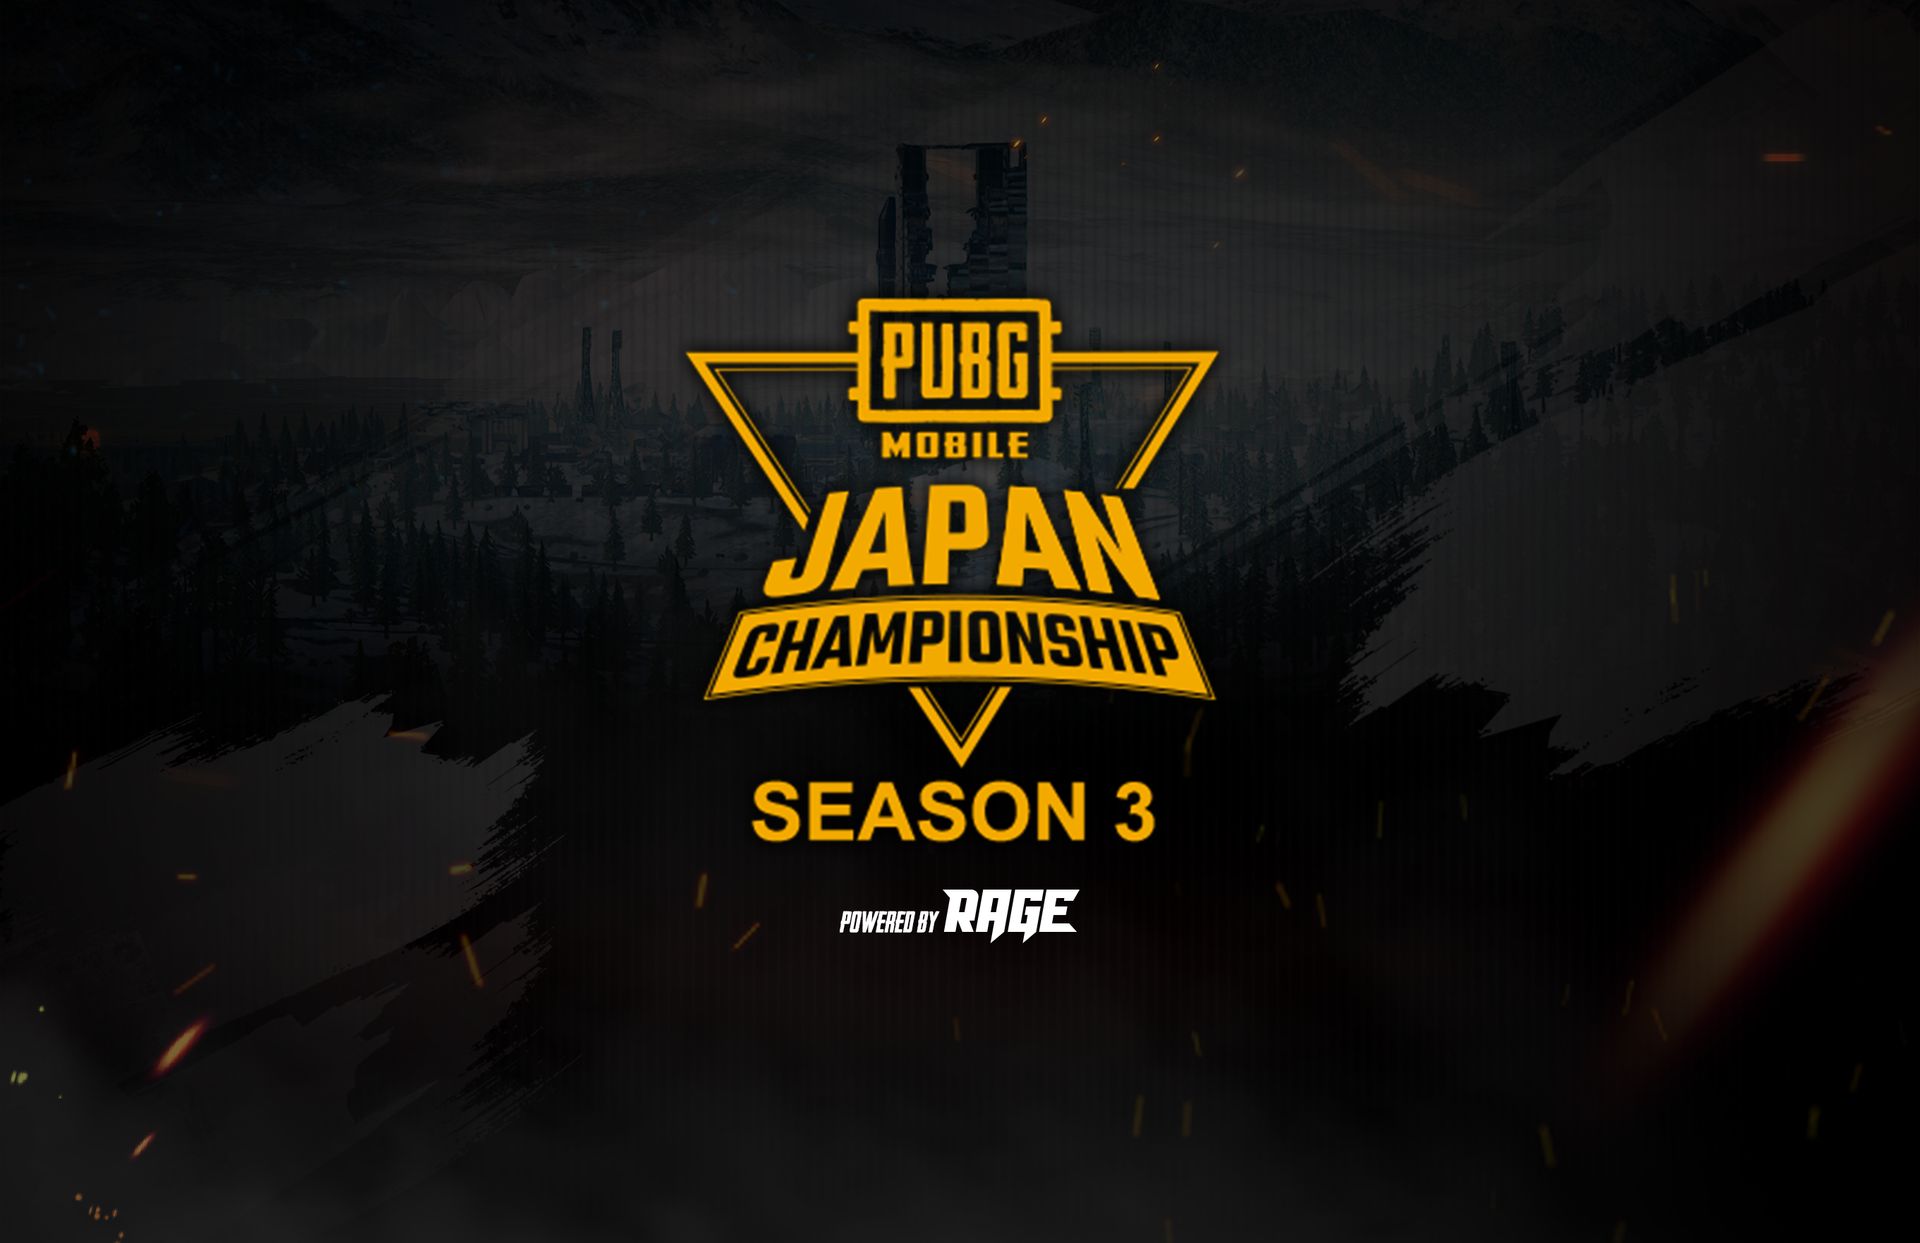 Pubg Mobile 公式大会 Pmjc Season3 Powered By Rage 開催決定 Game Watch